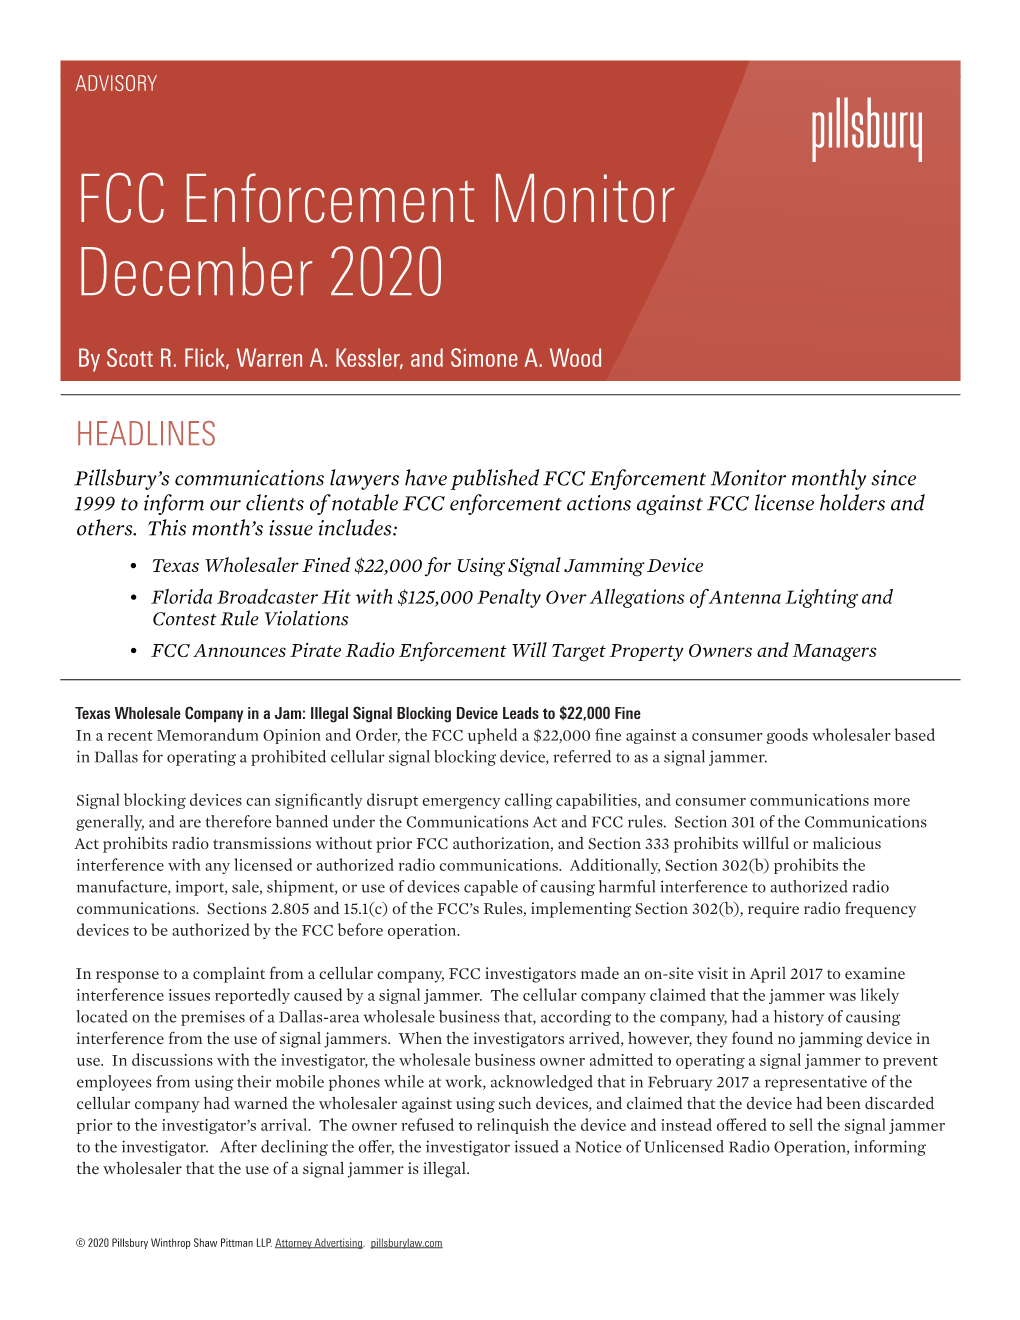 FCC Enforcement Monitor December 2020